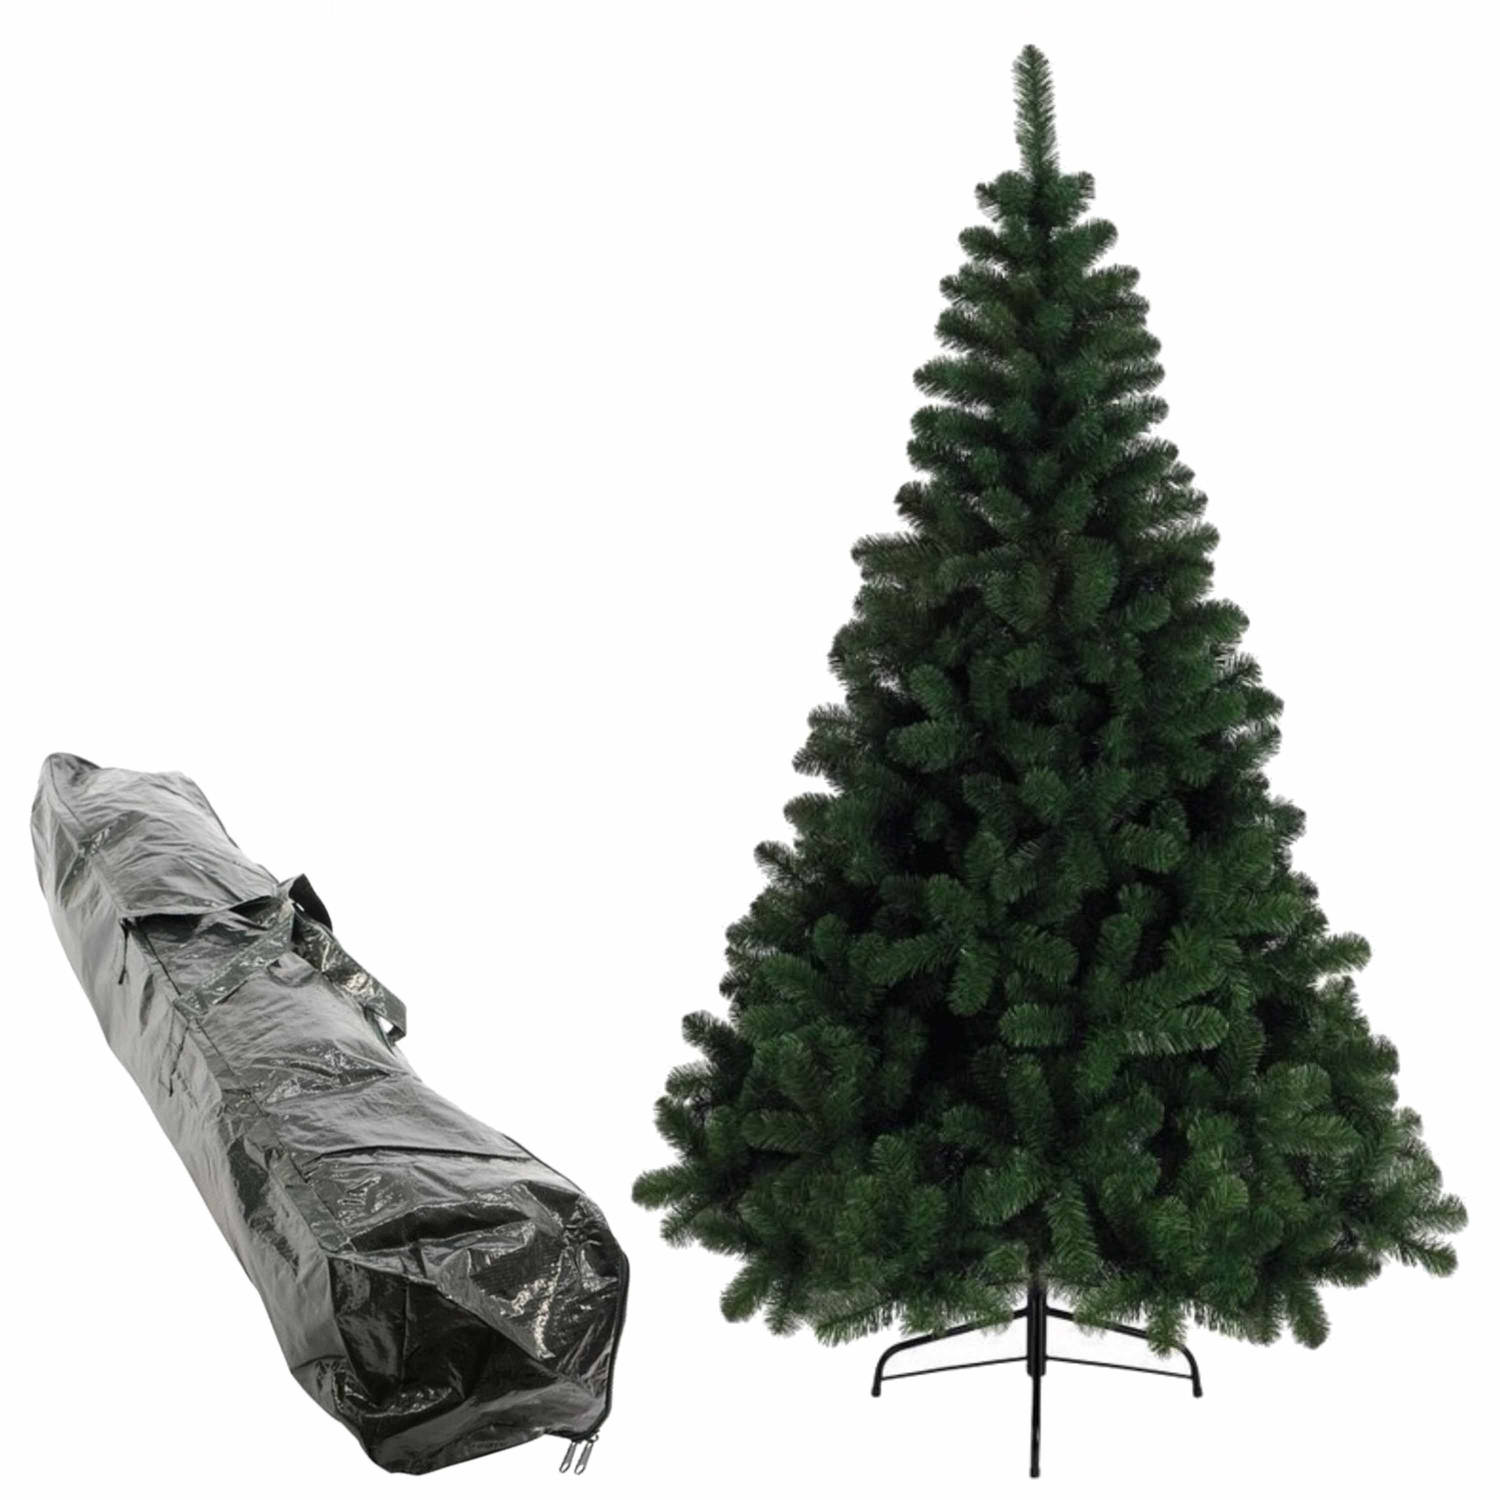 Kunst Kerstboom Imperial Pine 120 Cm Inclusief Opbergzak Kunstkerstboom